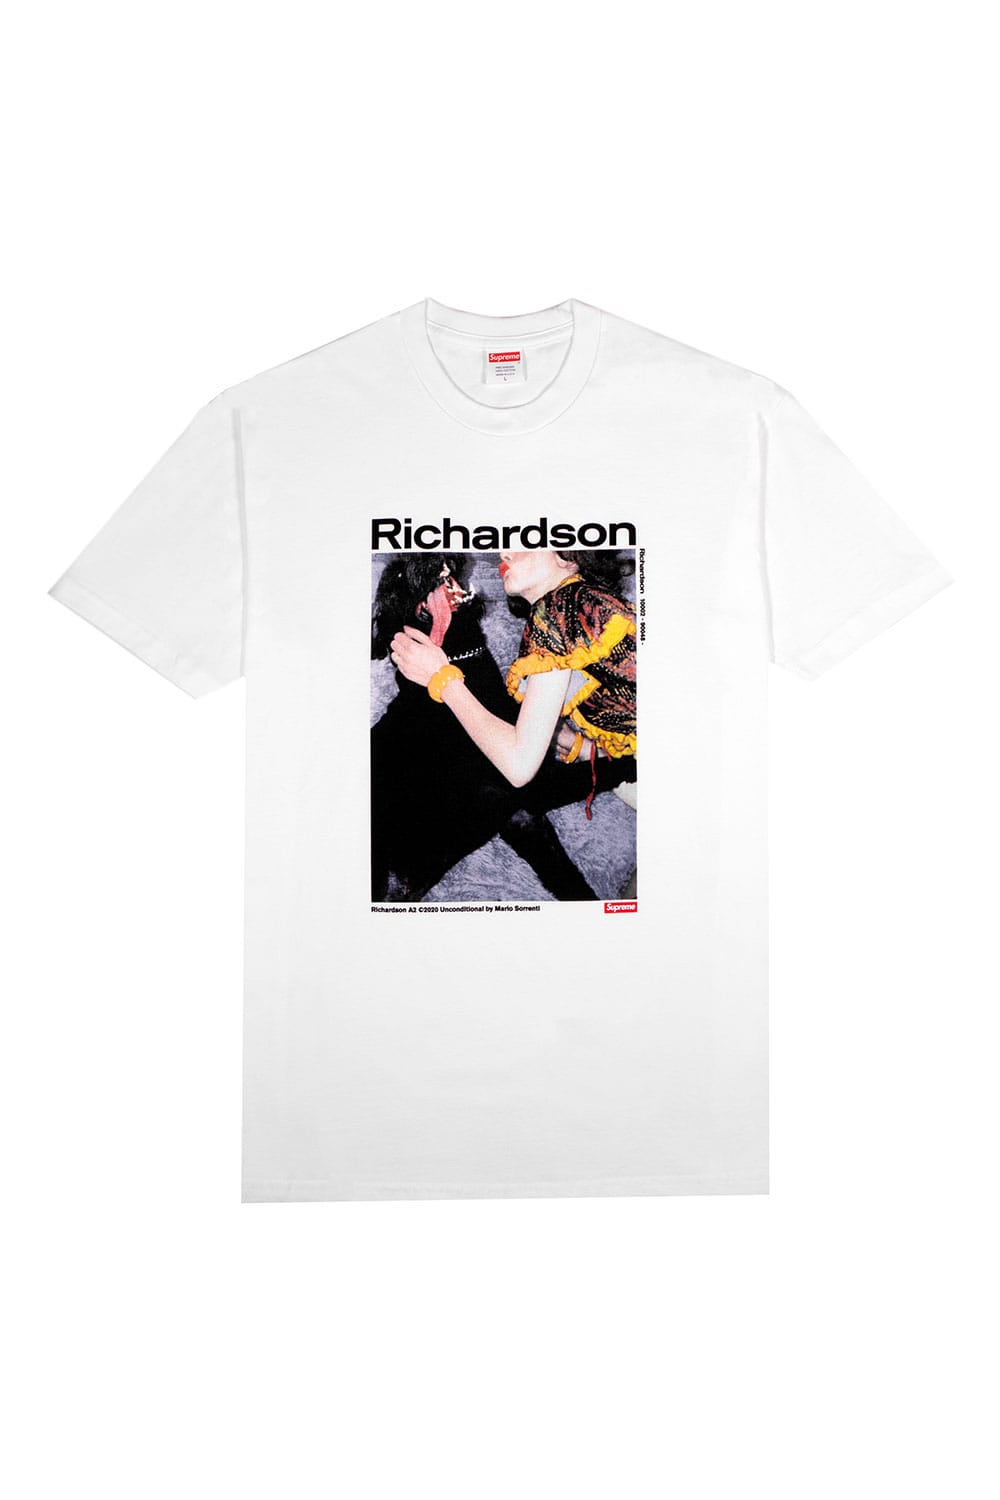 Richardson x Supreme 'Unconditional' Collab T-Shirt | Hypebeast